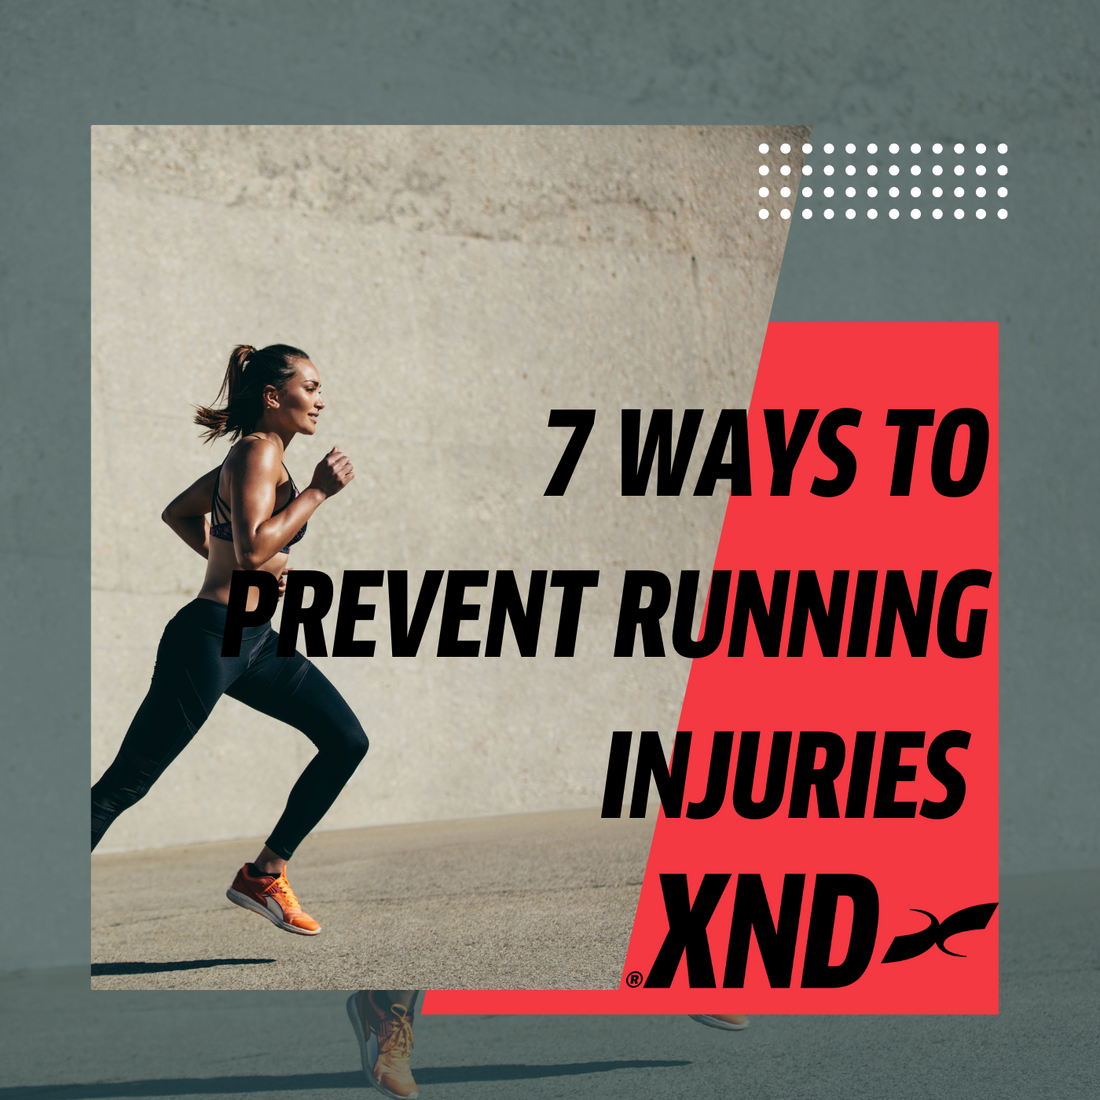 7 ways to prevent running injuries